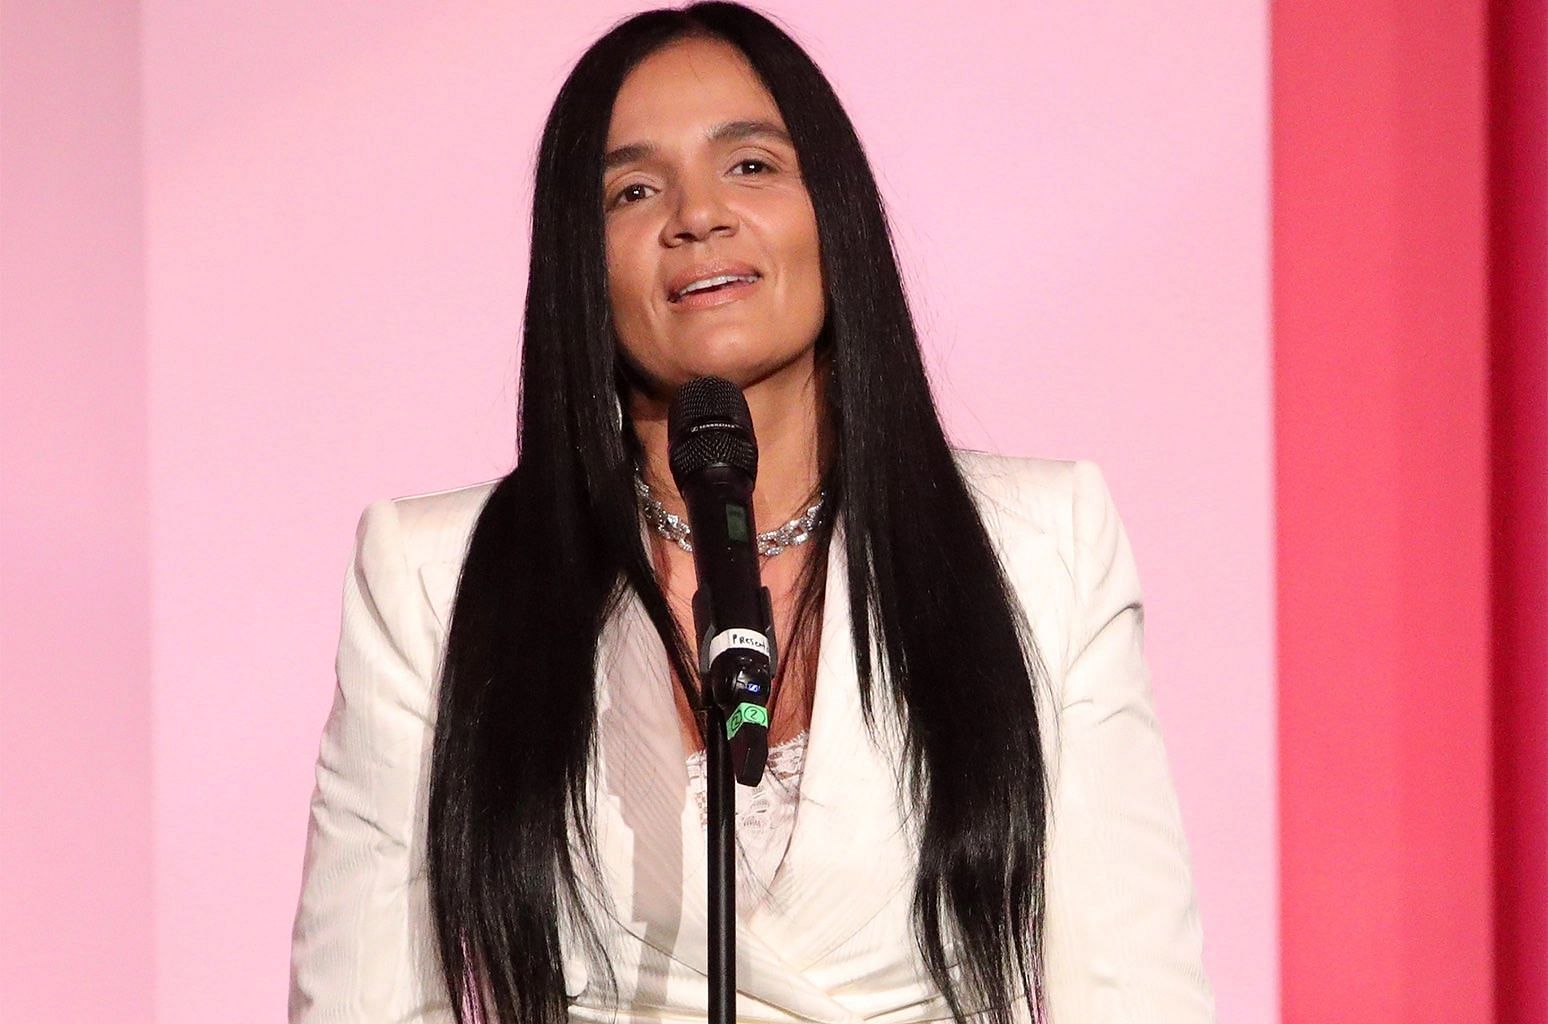 Desiree Perez accepting the 2019 Executive of the Year award (Image via Getty/Billboard)